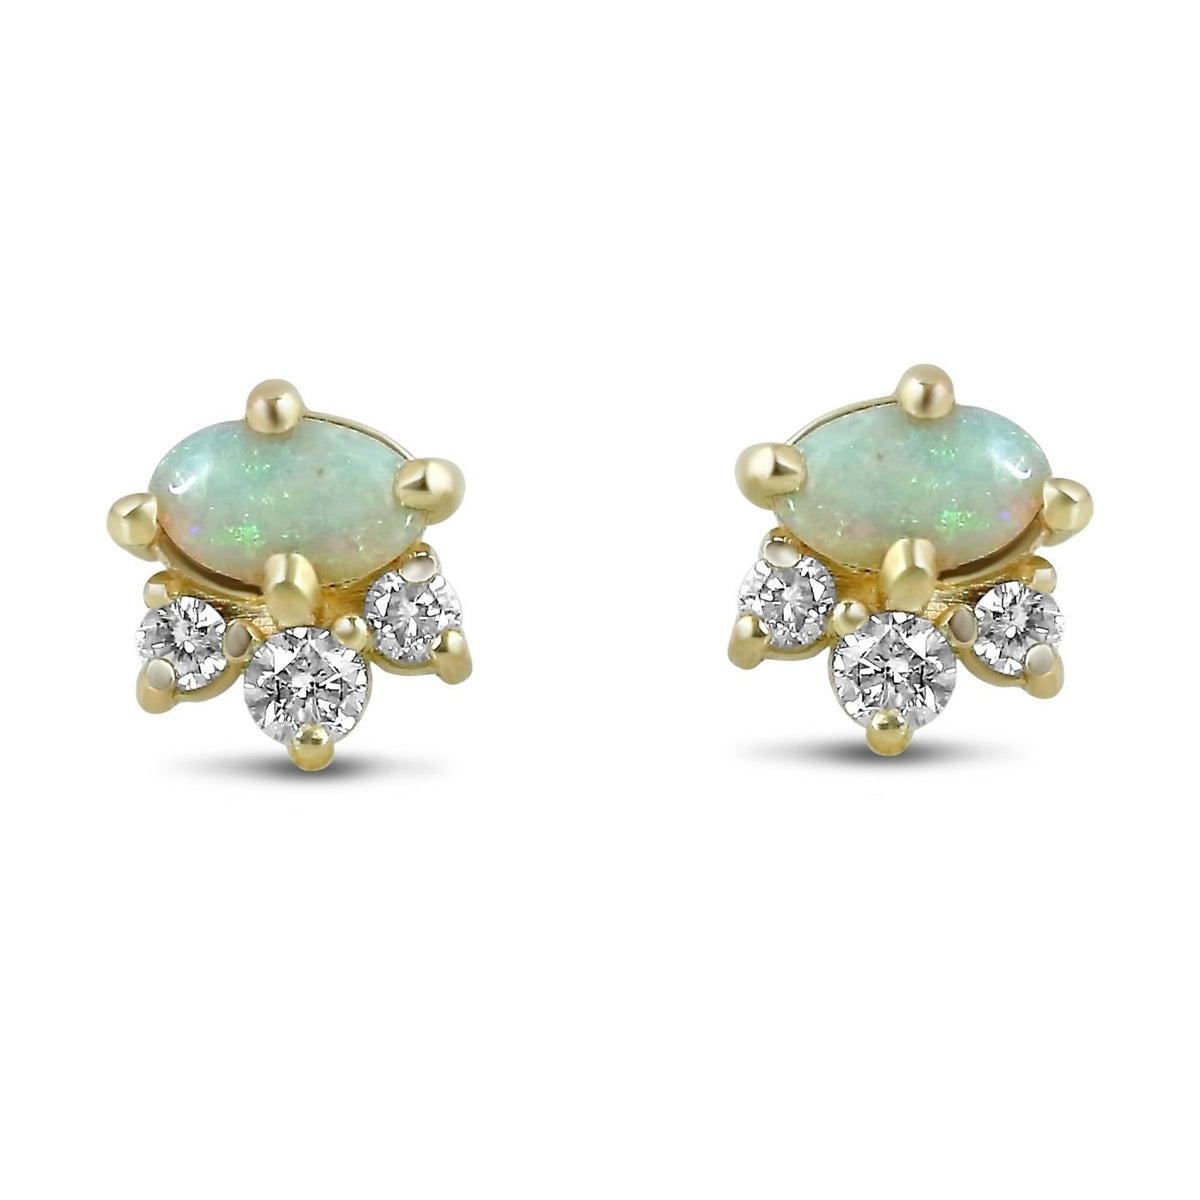 14k yellow gold cabochon cut opal and round brilliant cut diamond stud earrings